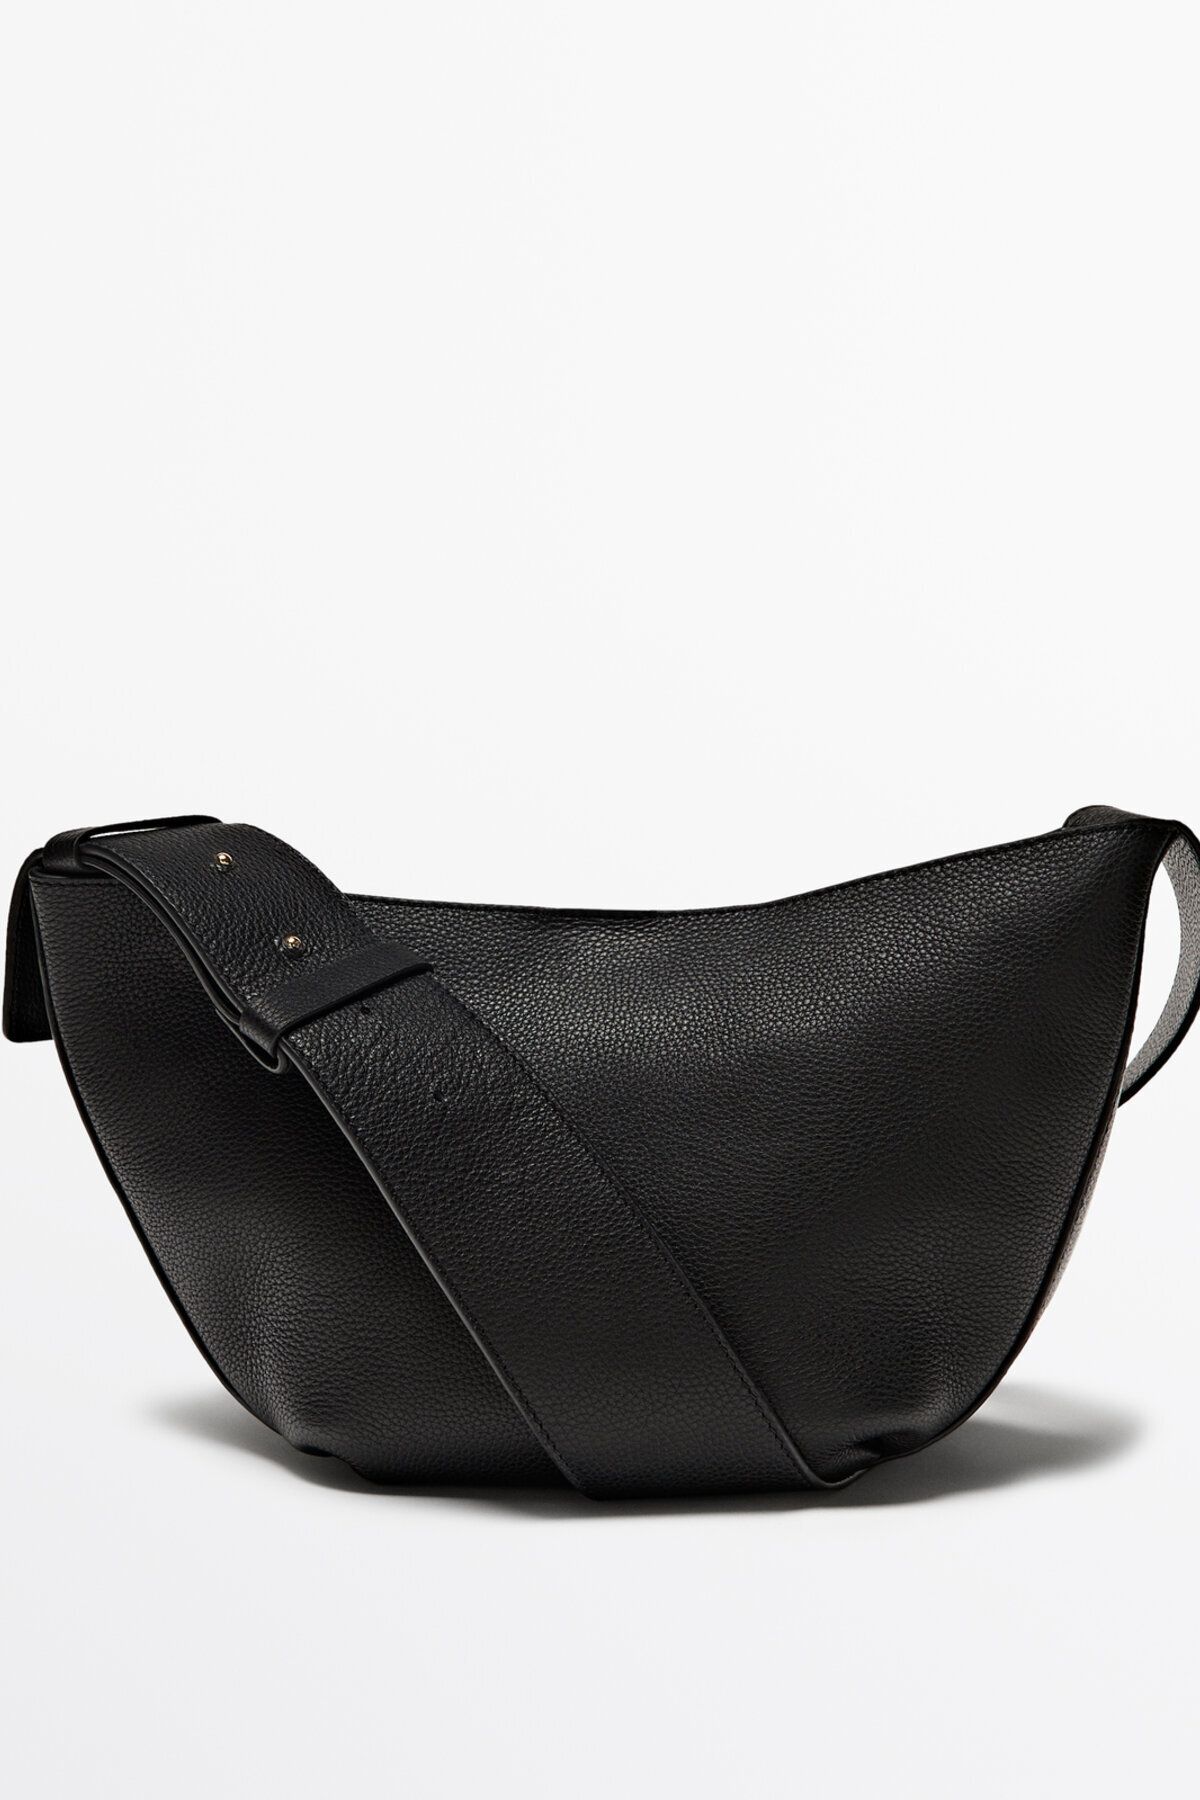 Massimo Dutti Eskitilmiş Nappa deri çapraz askılı çanta